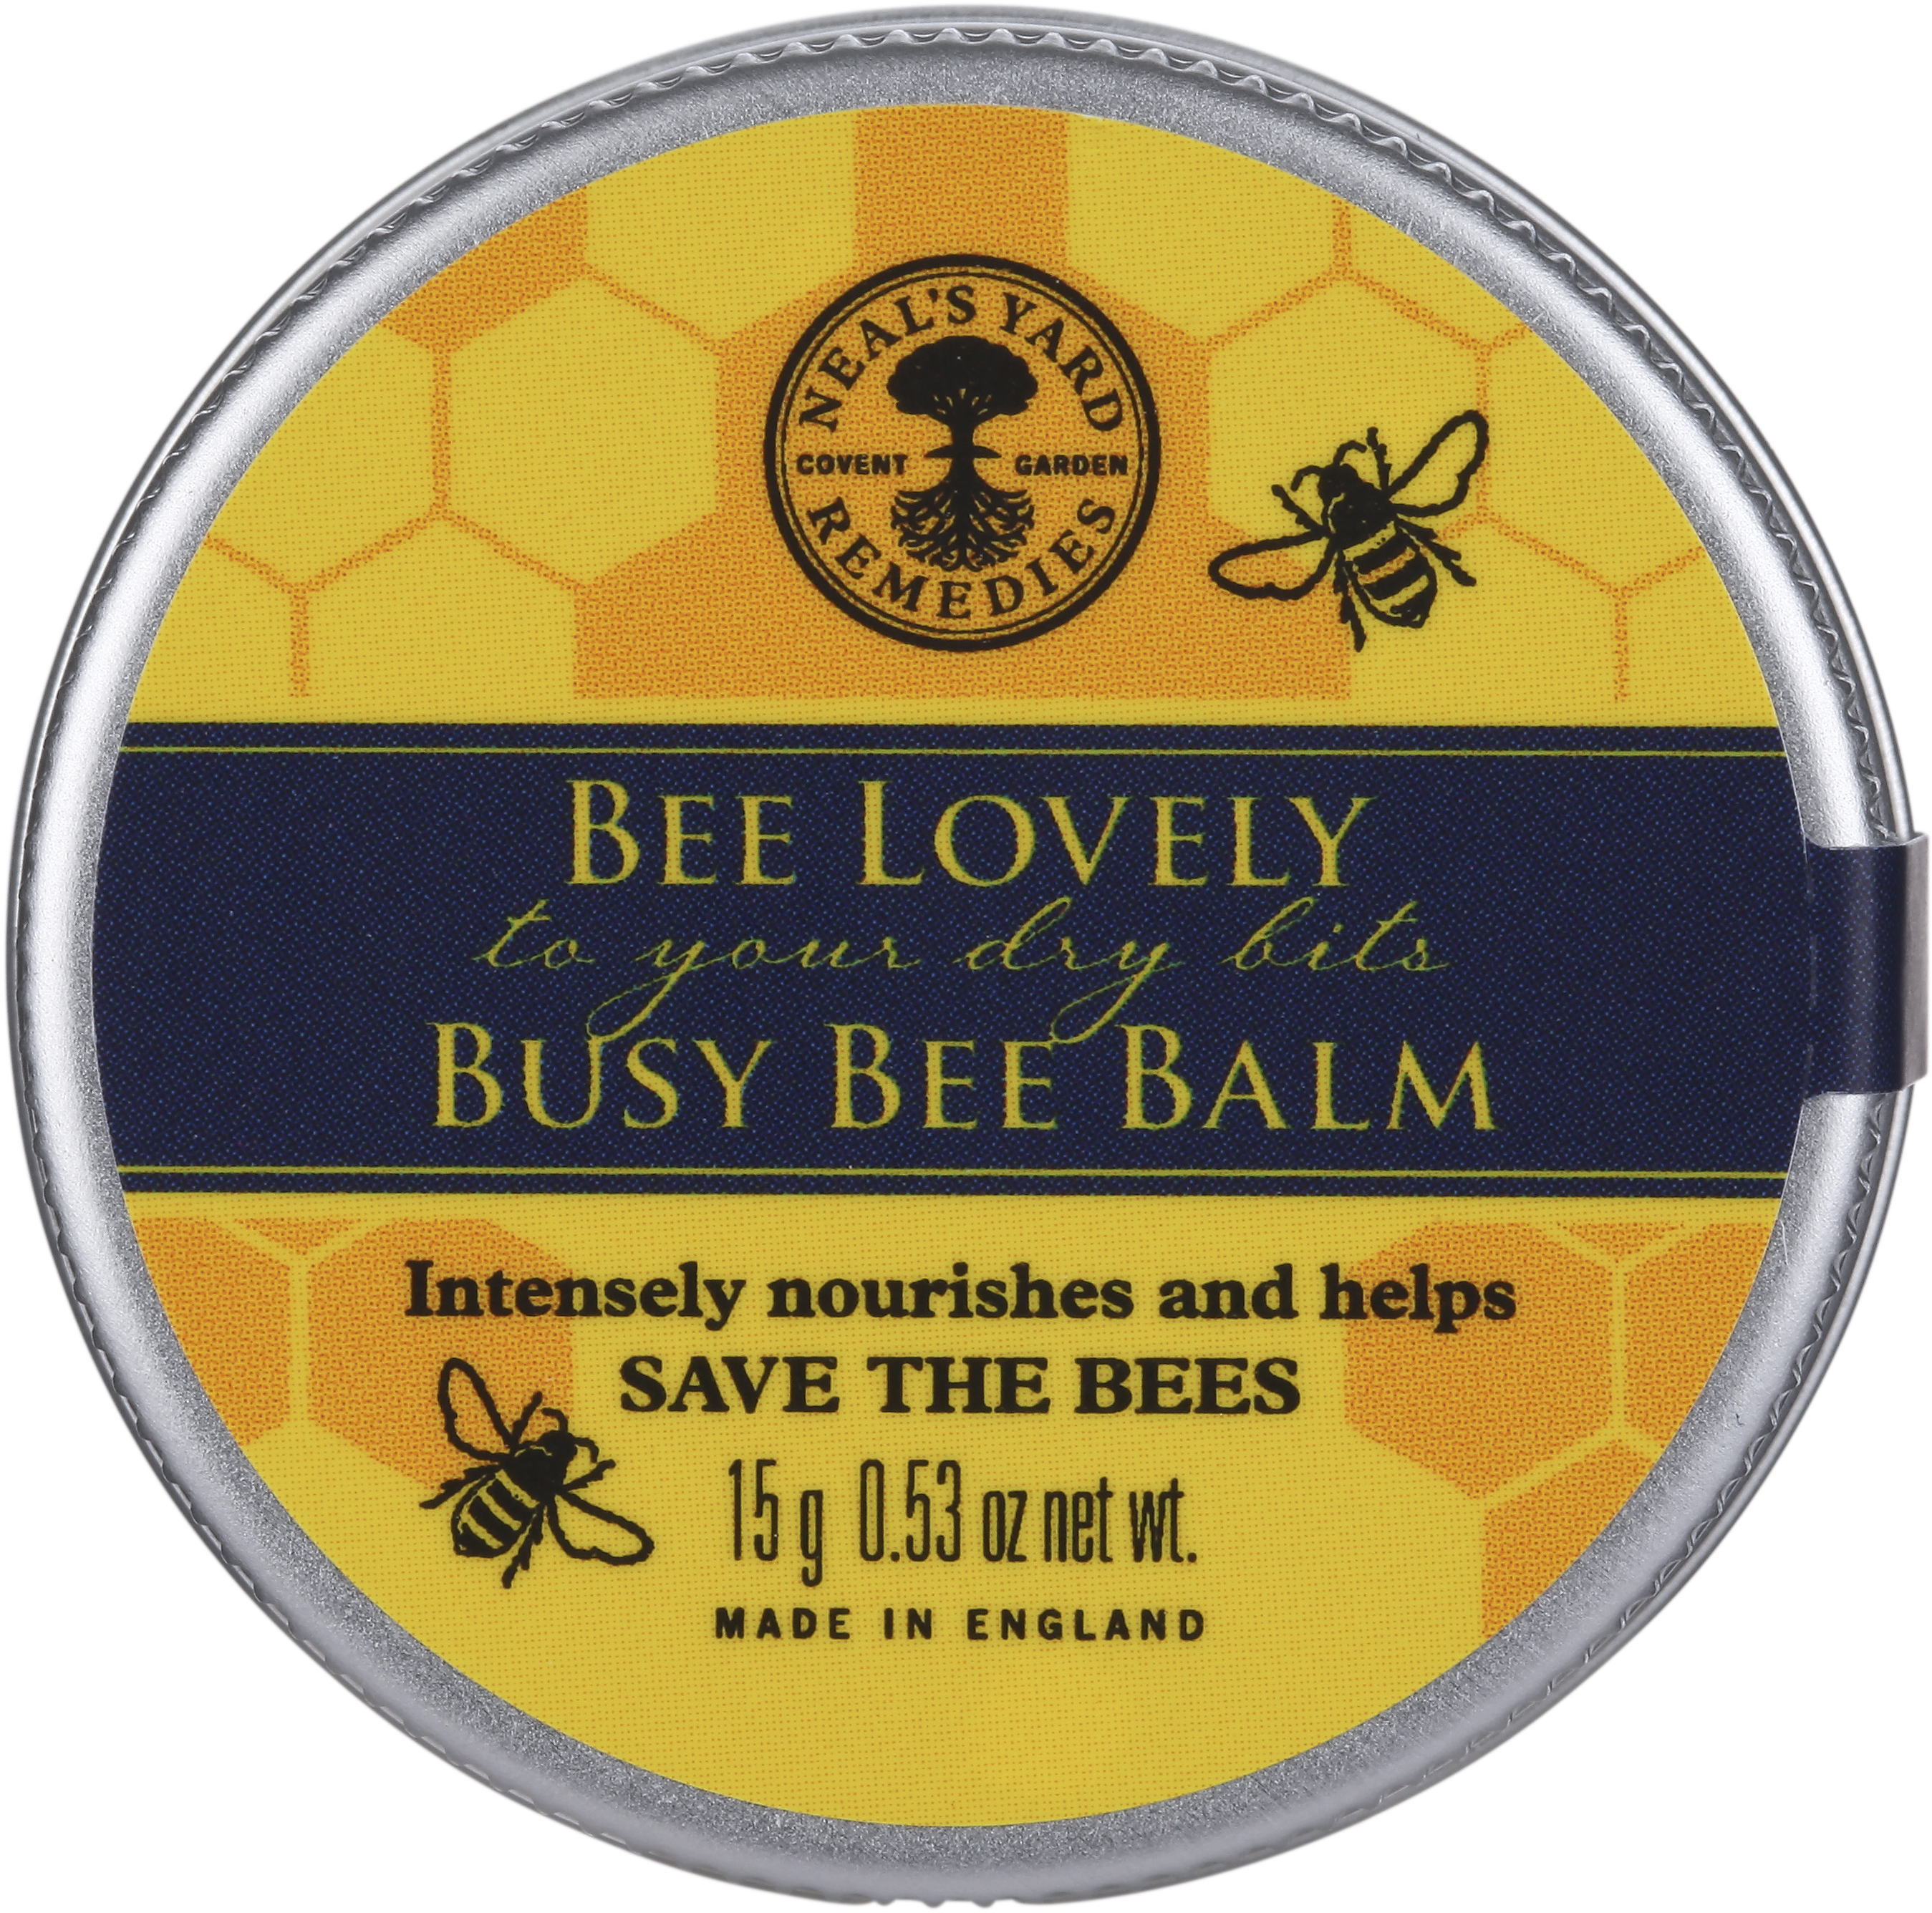 Neal’s Yard Remedies Bee Lovely Balm 15ml